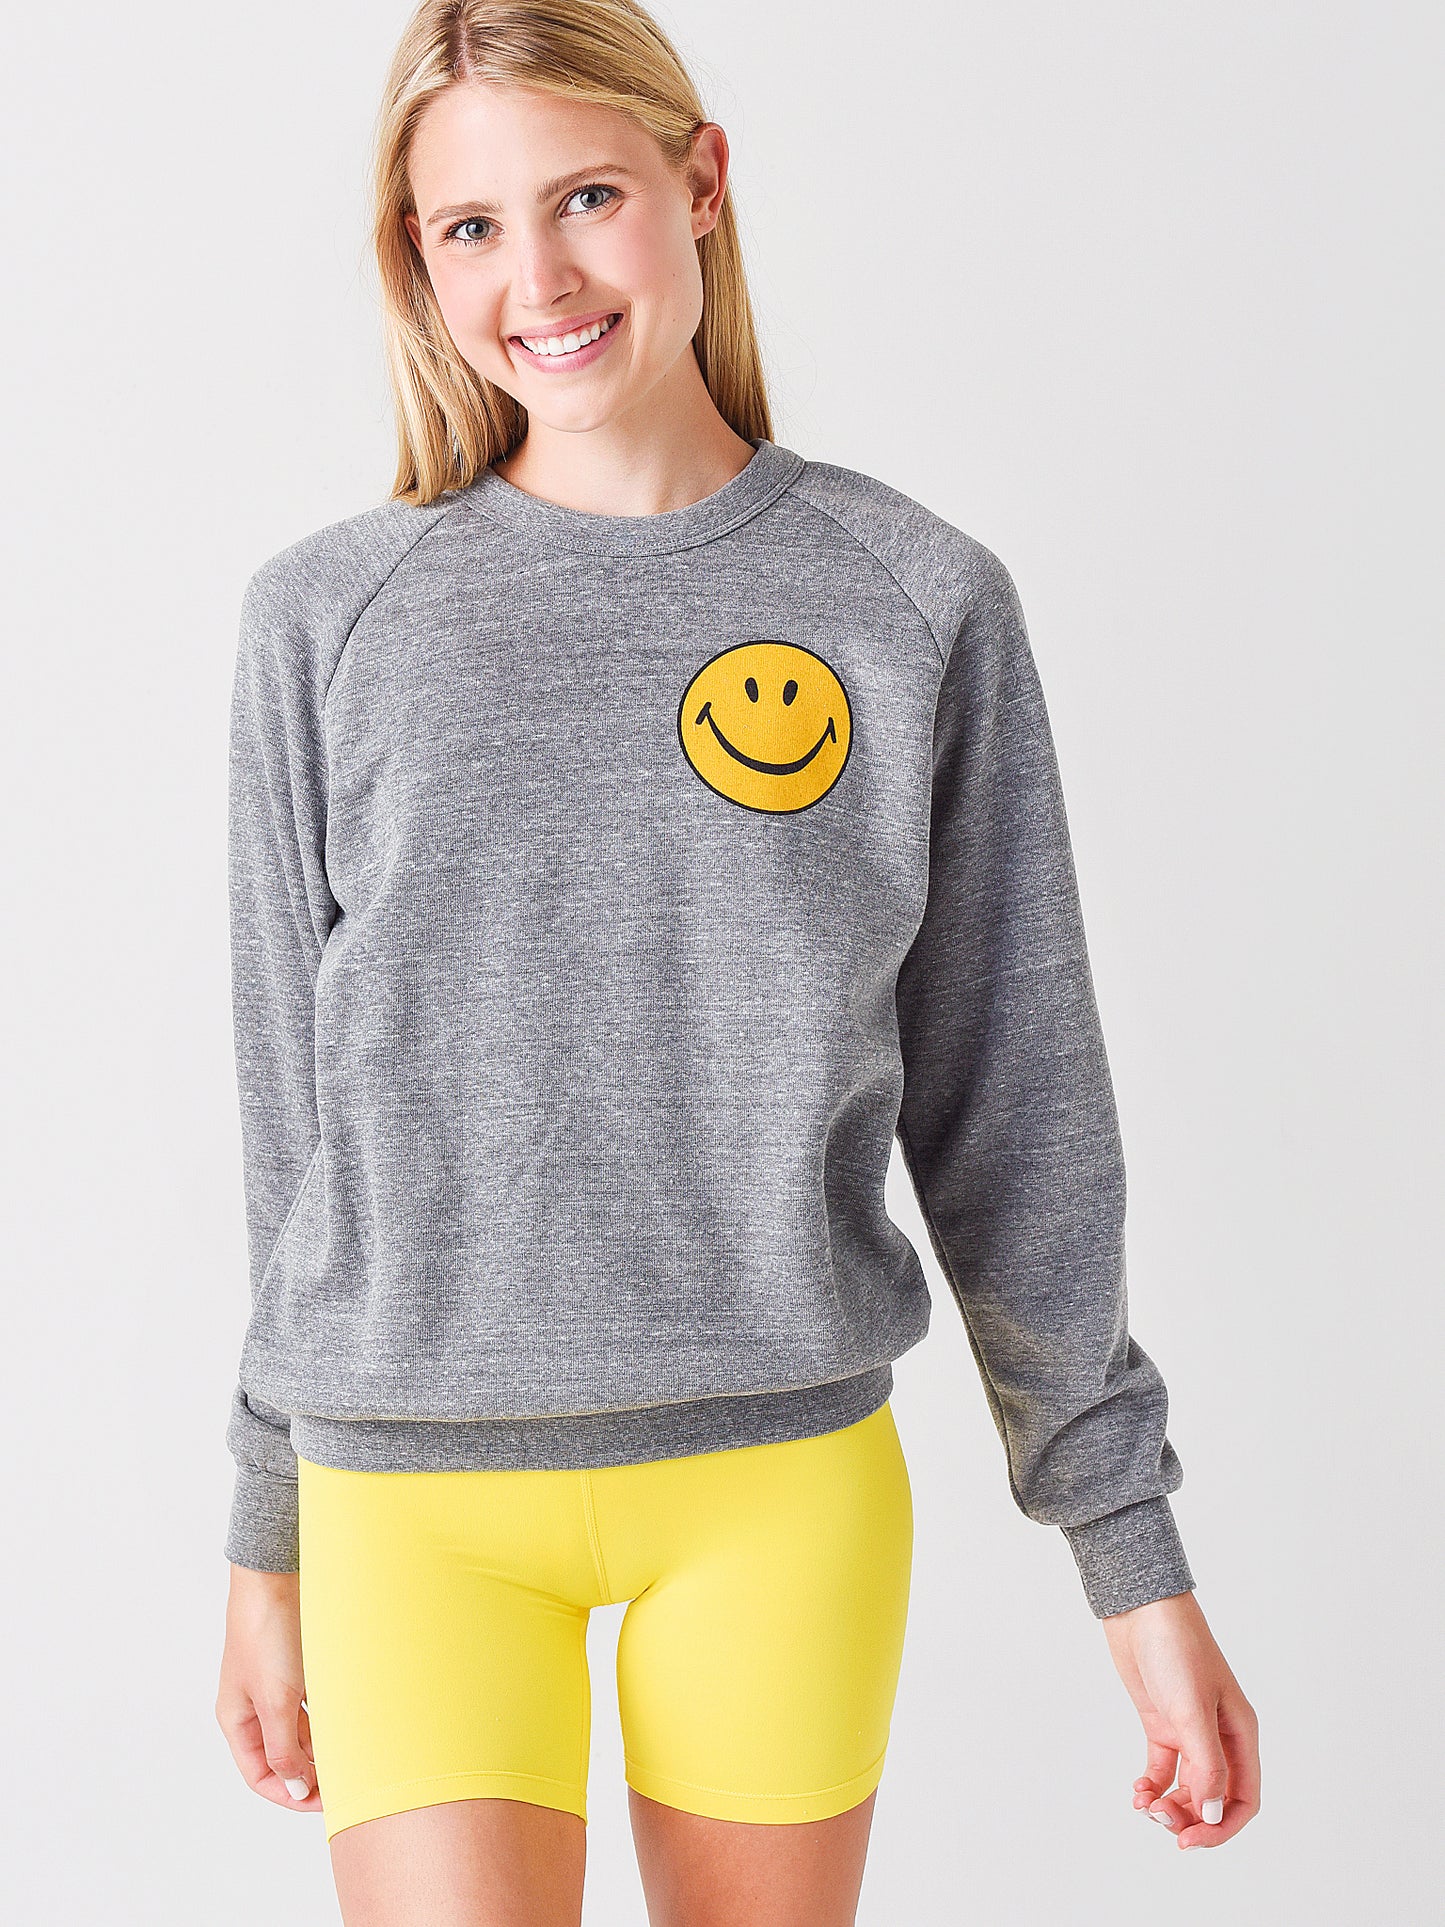 Aviator Nation Women's Smiley Sweatshirt